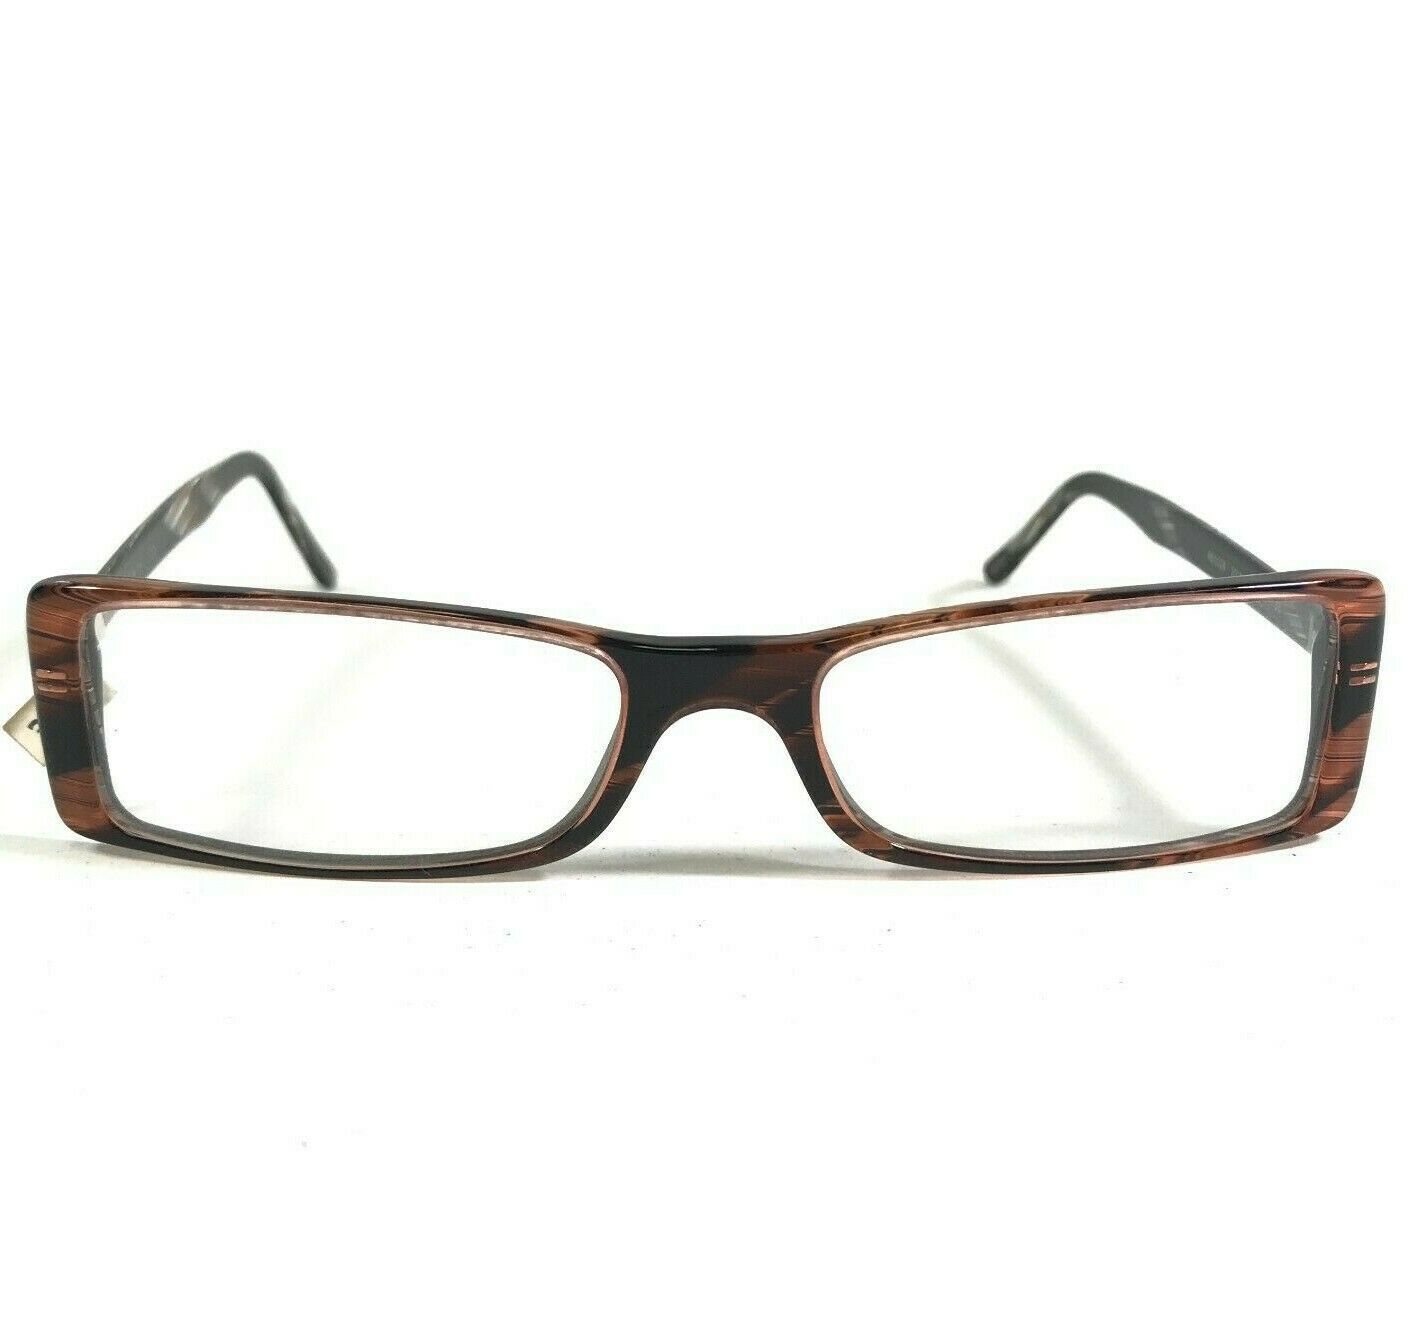 Ray-Ban RB5028 2016 Eyeglasses Frames Black Brown Rectangular Cat Eye 49-16-135 - $65.44